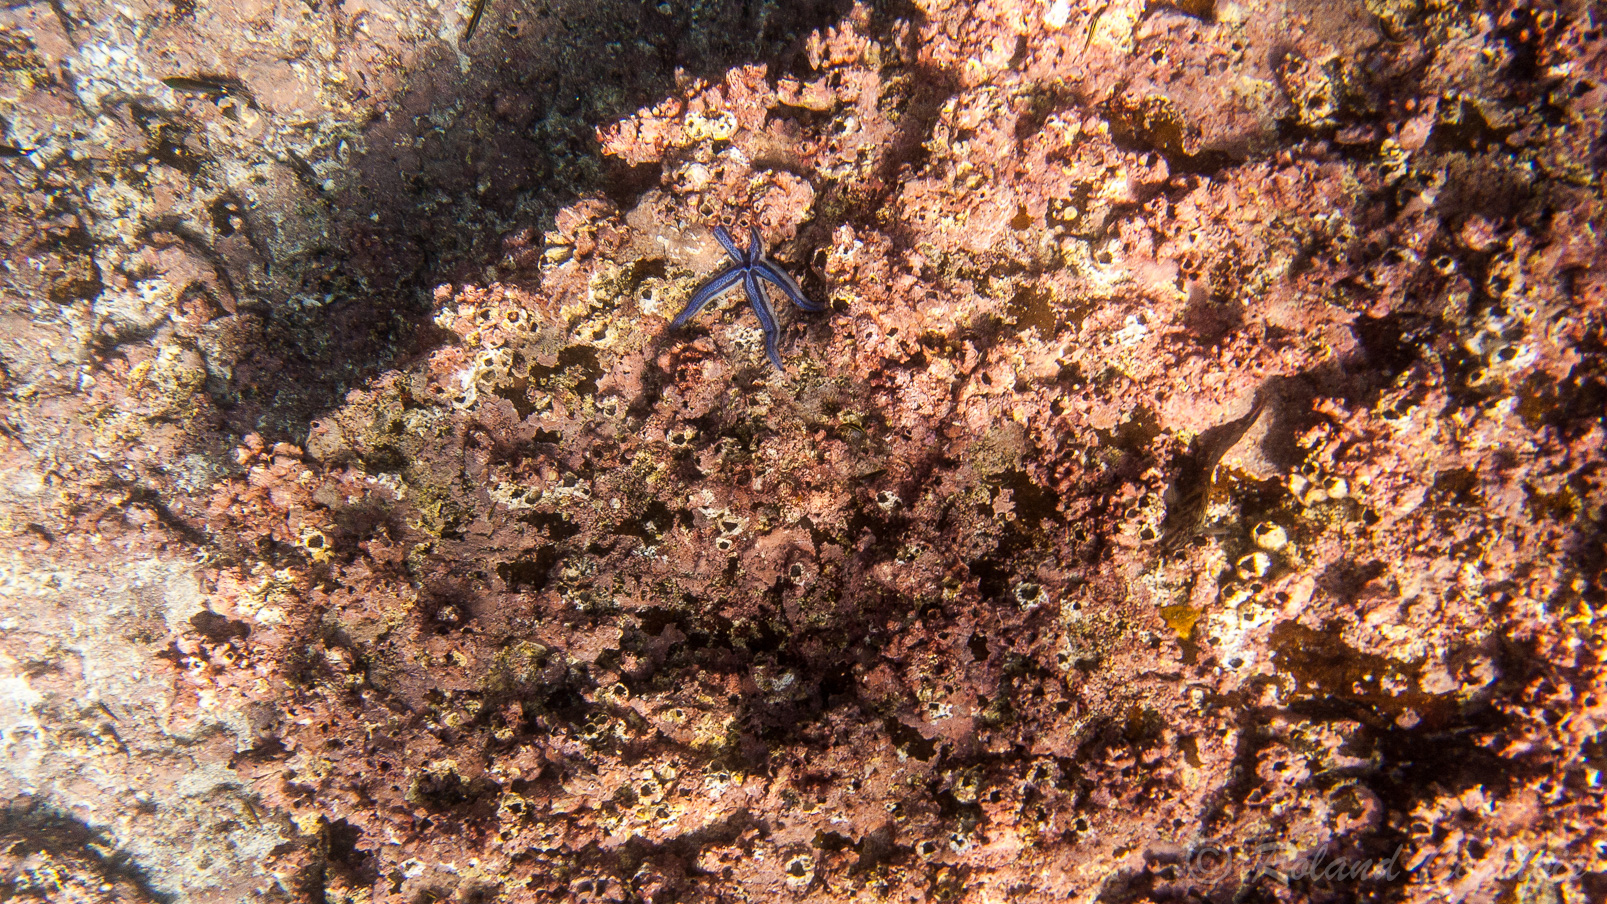 Magnifique étoile de mer bleue des Galapagos